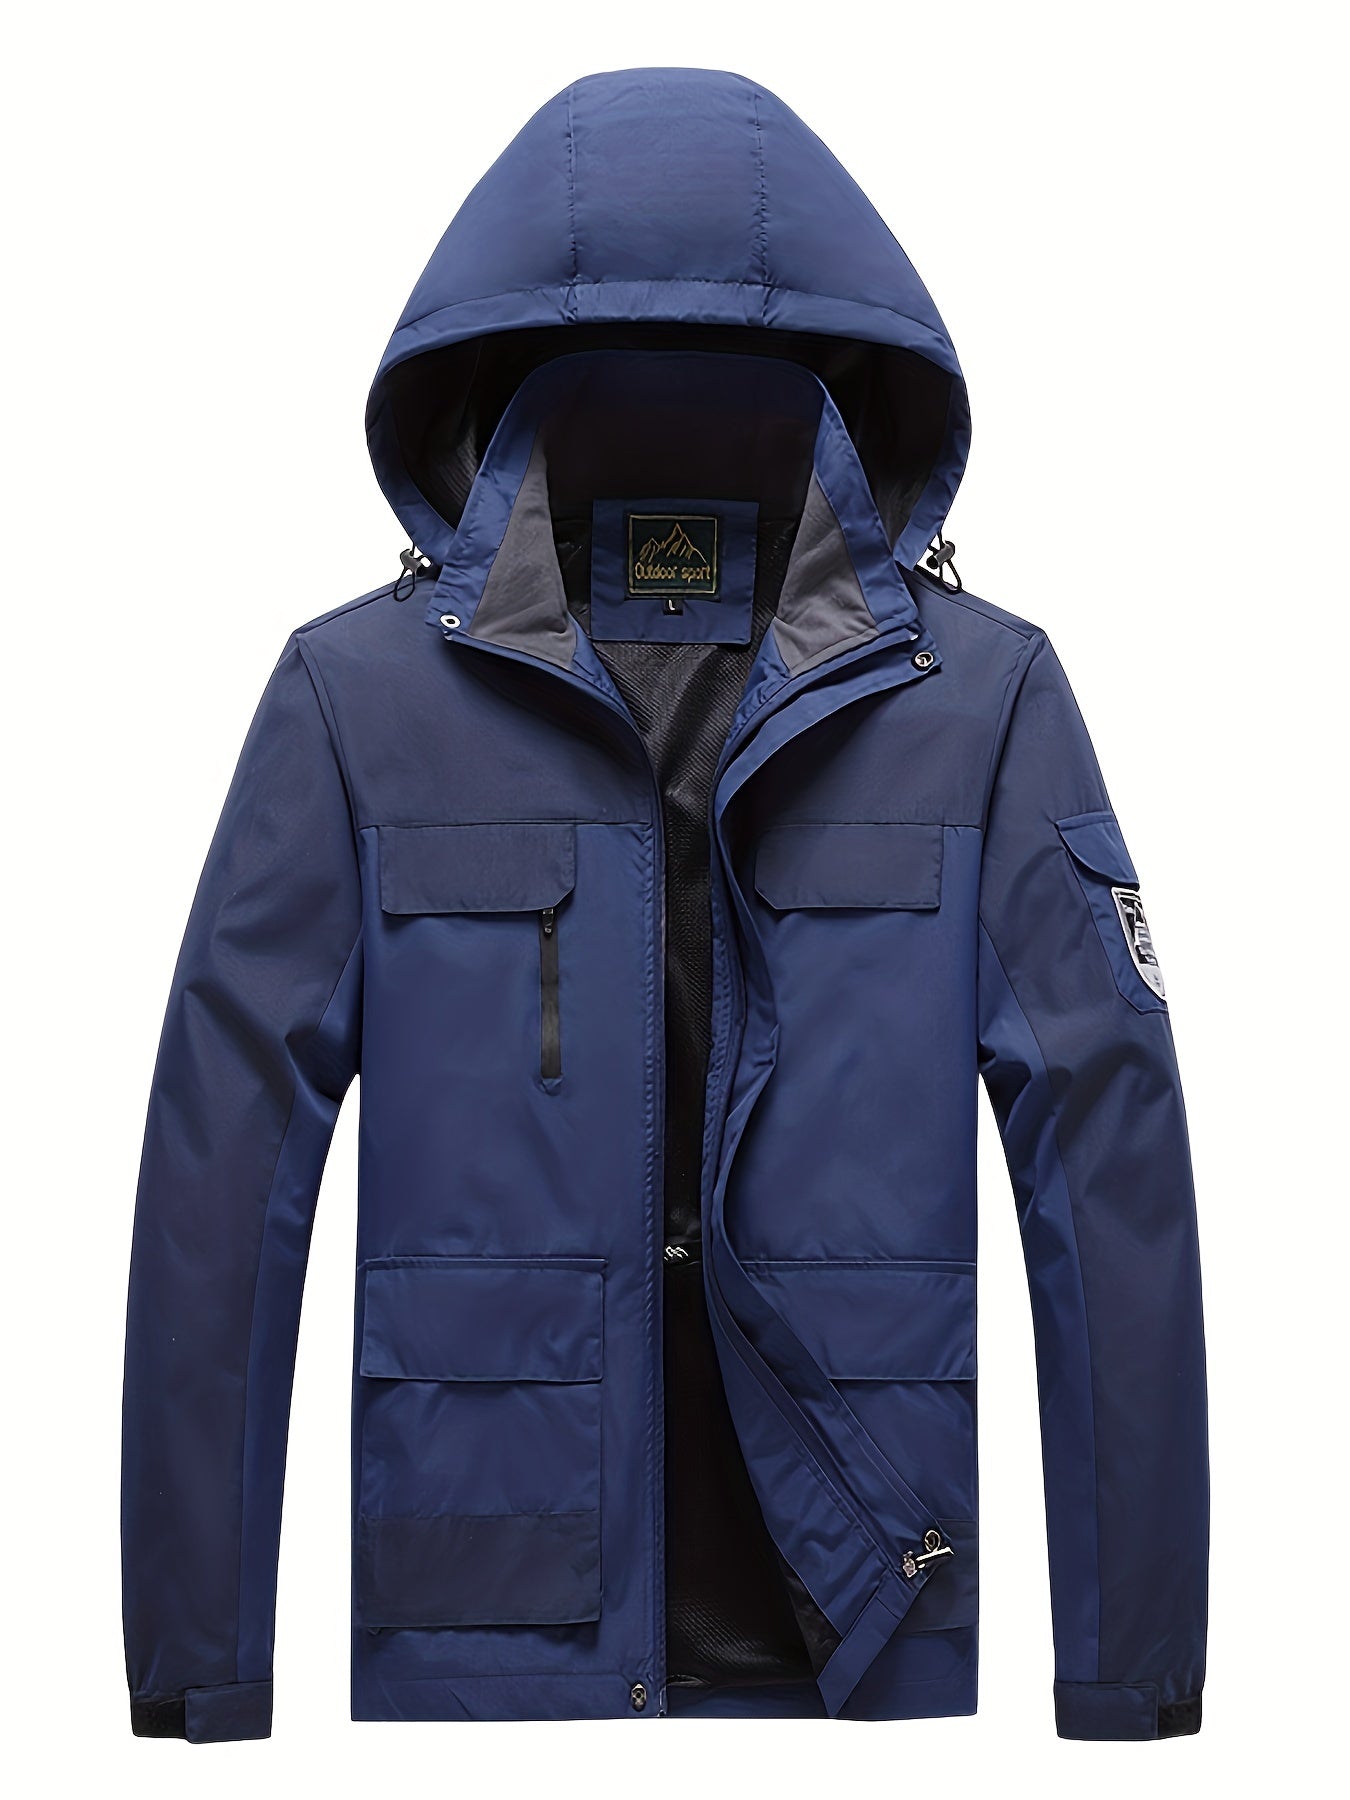 Men's Casual Waterproof Windbreaker Jacket Hooded Coat Regular Fit Coat For Spring Autumn Outdoors Hiking Fishing